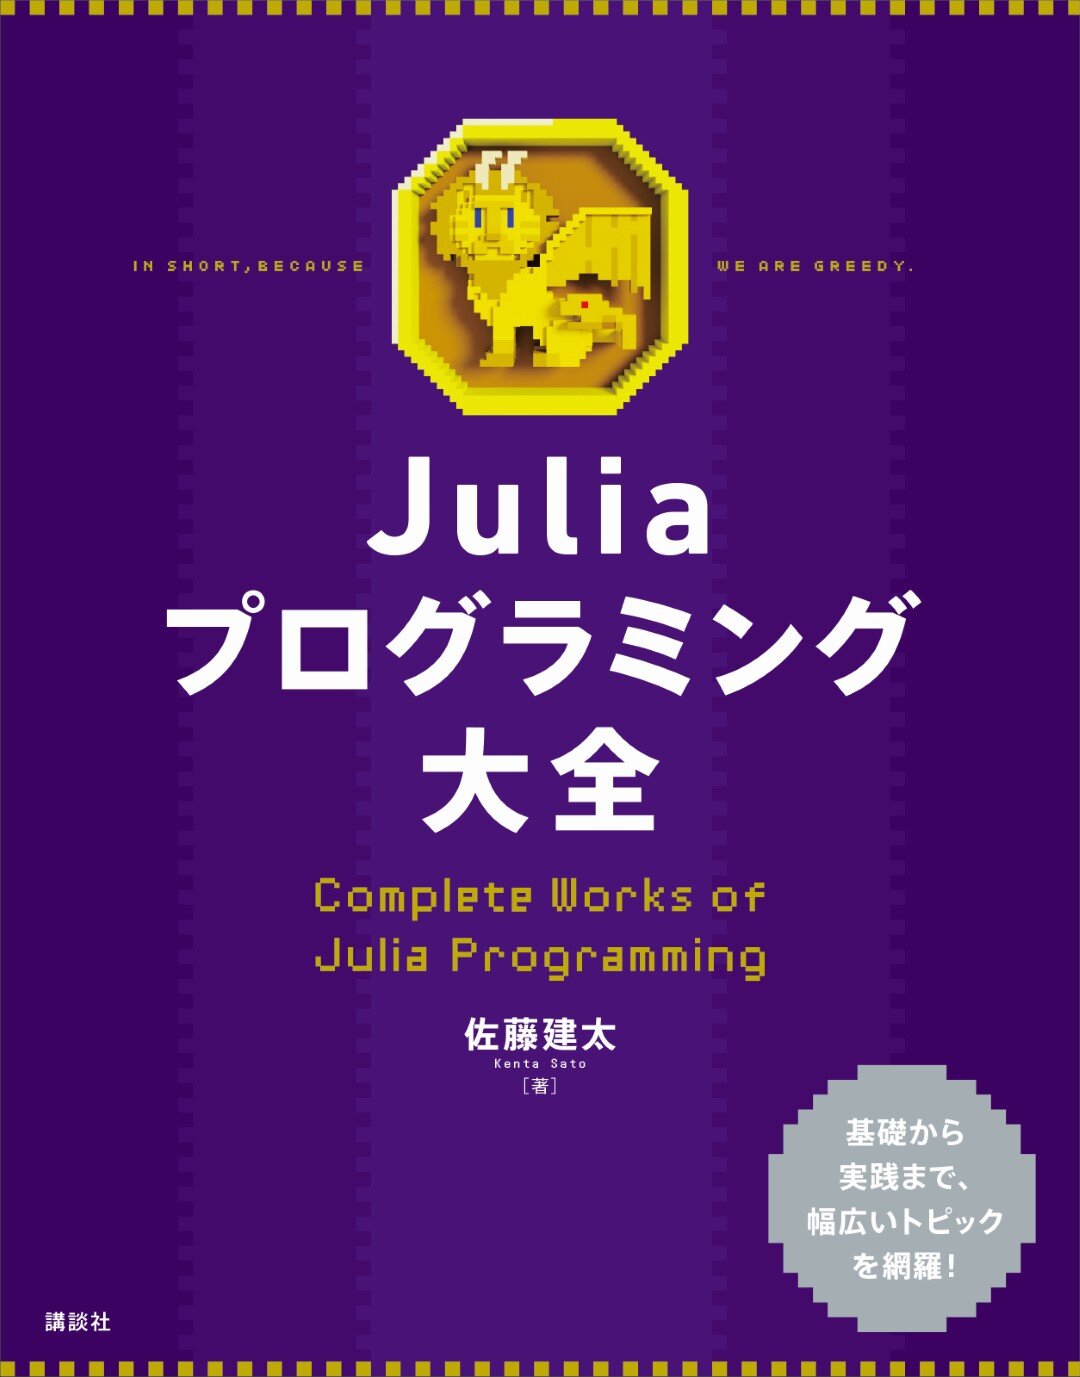 Juliaプログラミング大全 書籍情報 株式会社 講談社サイエンティフィク